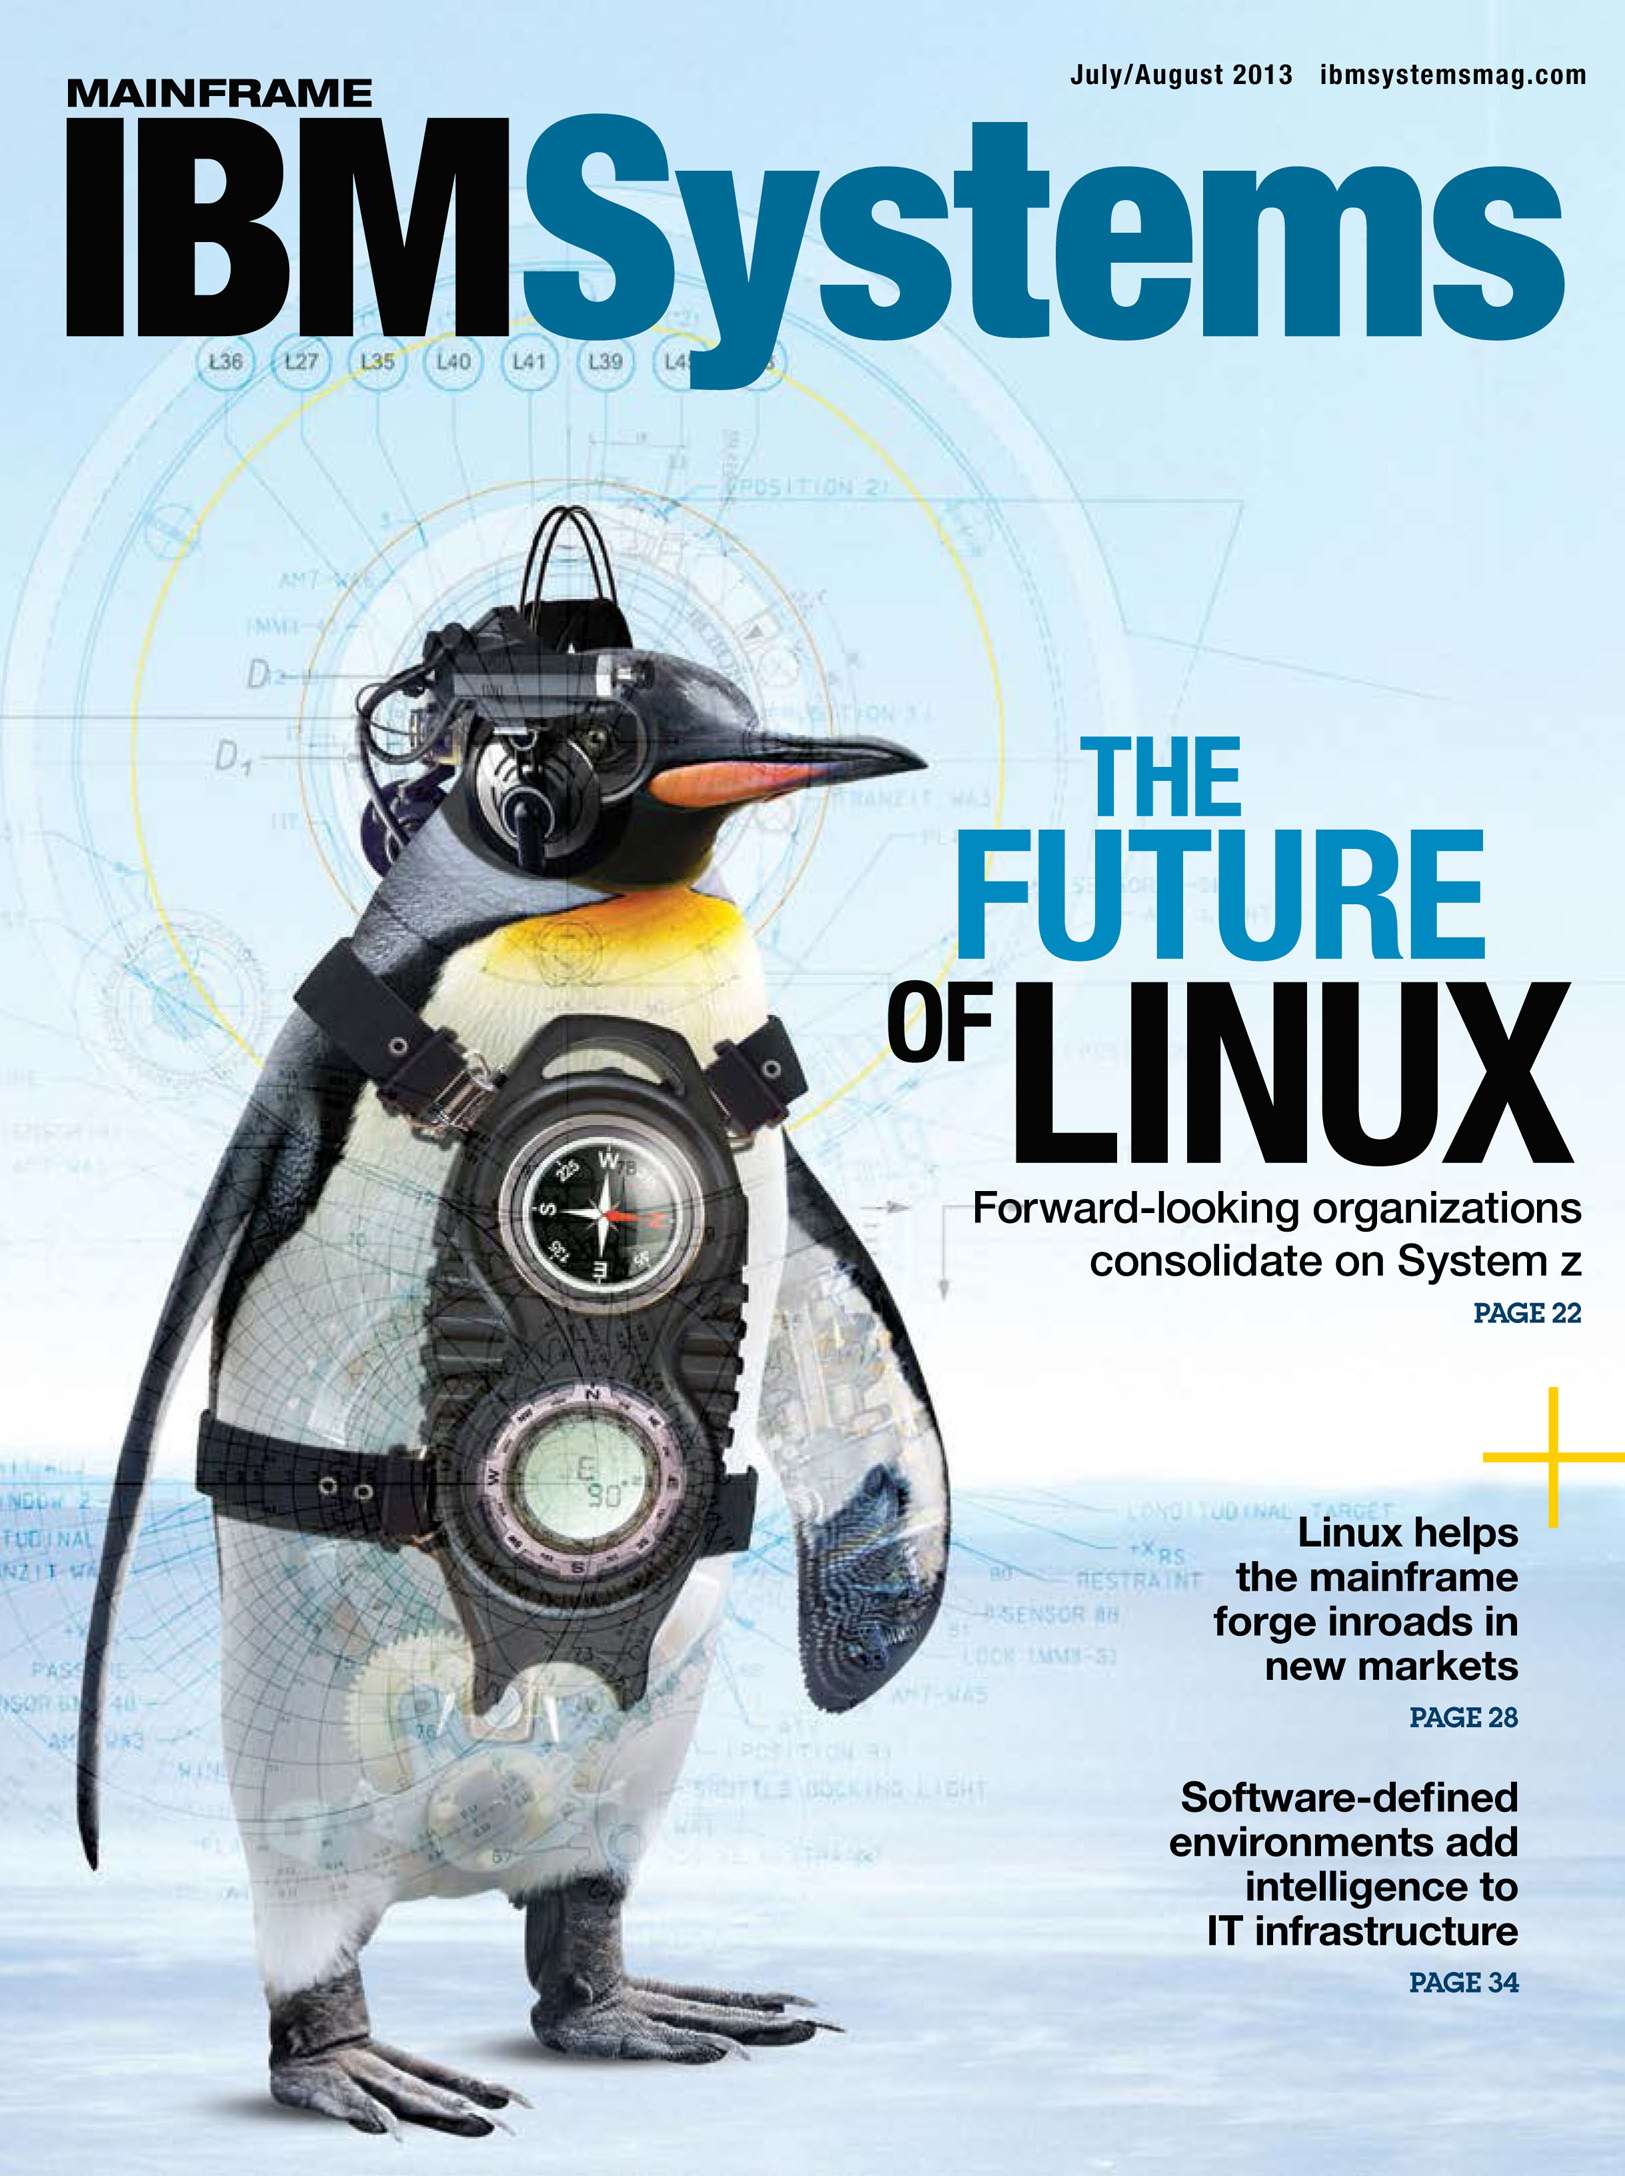 Penguins / IBM Systems